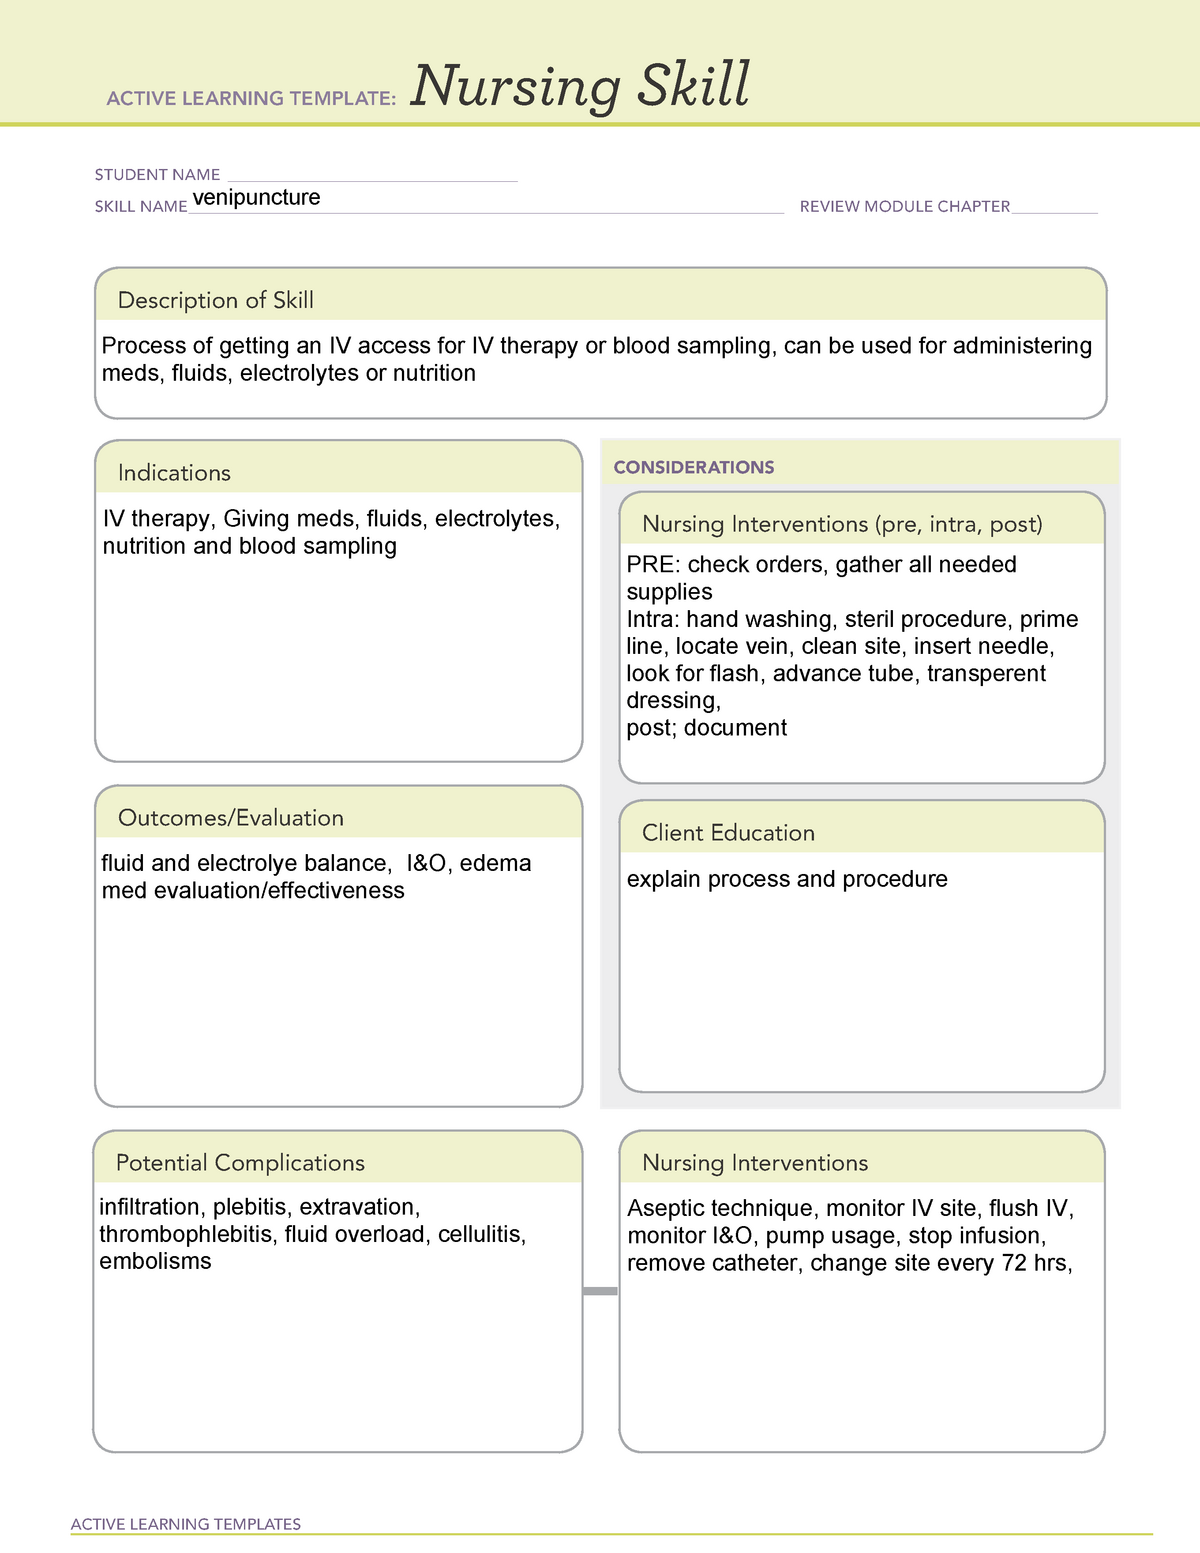 Nursing skill template (12) - HSRT 2342 - Studocu